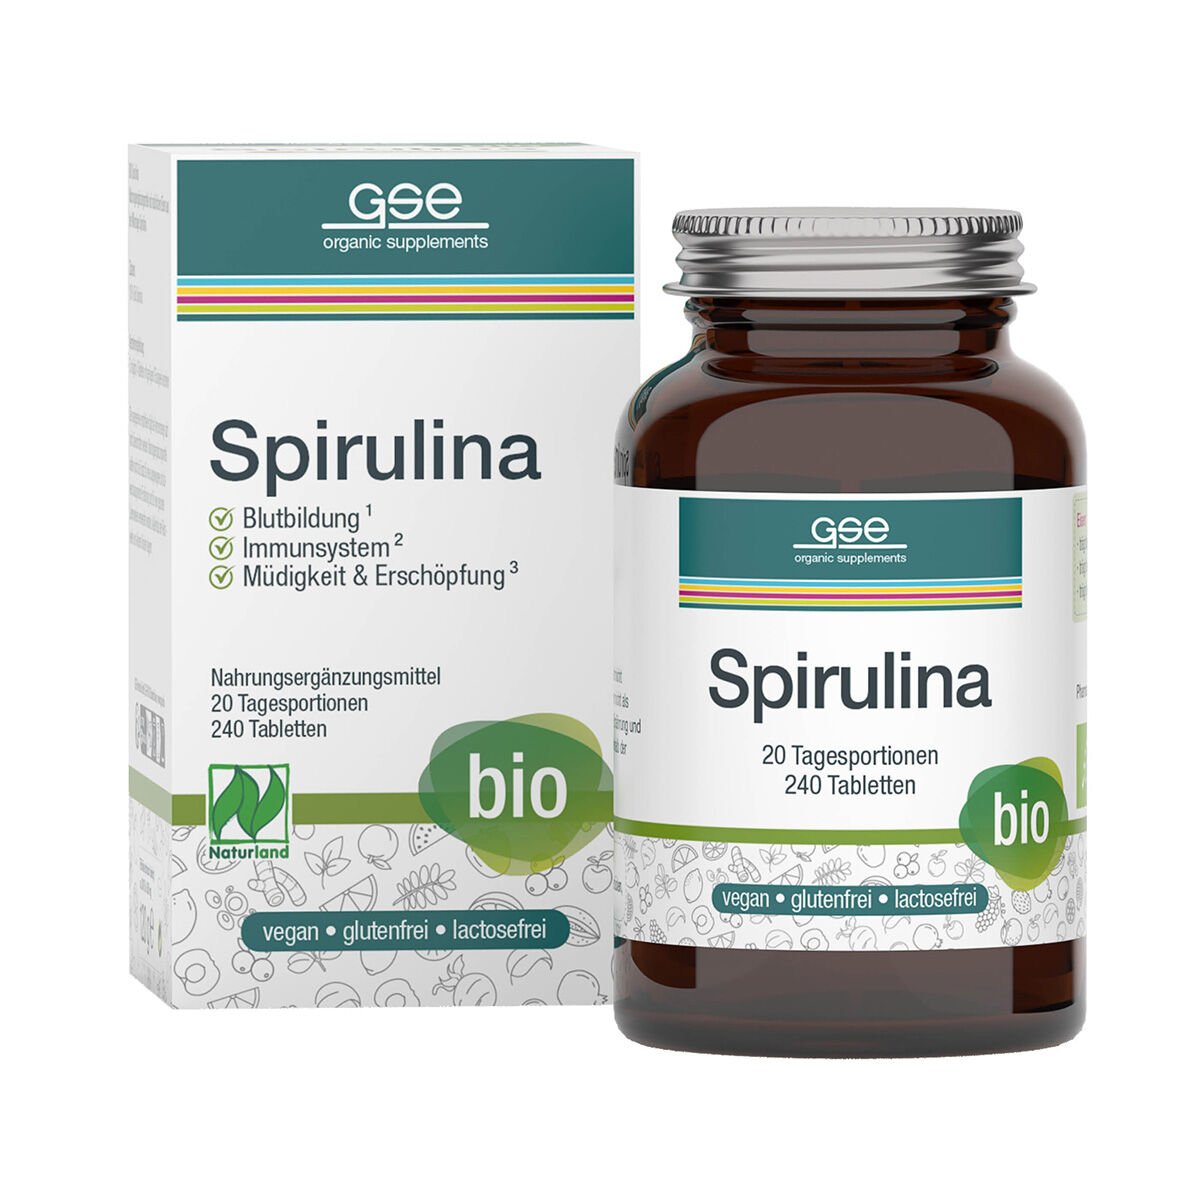 Naturland Bio Spirulina (Tabletten)